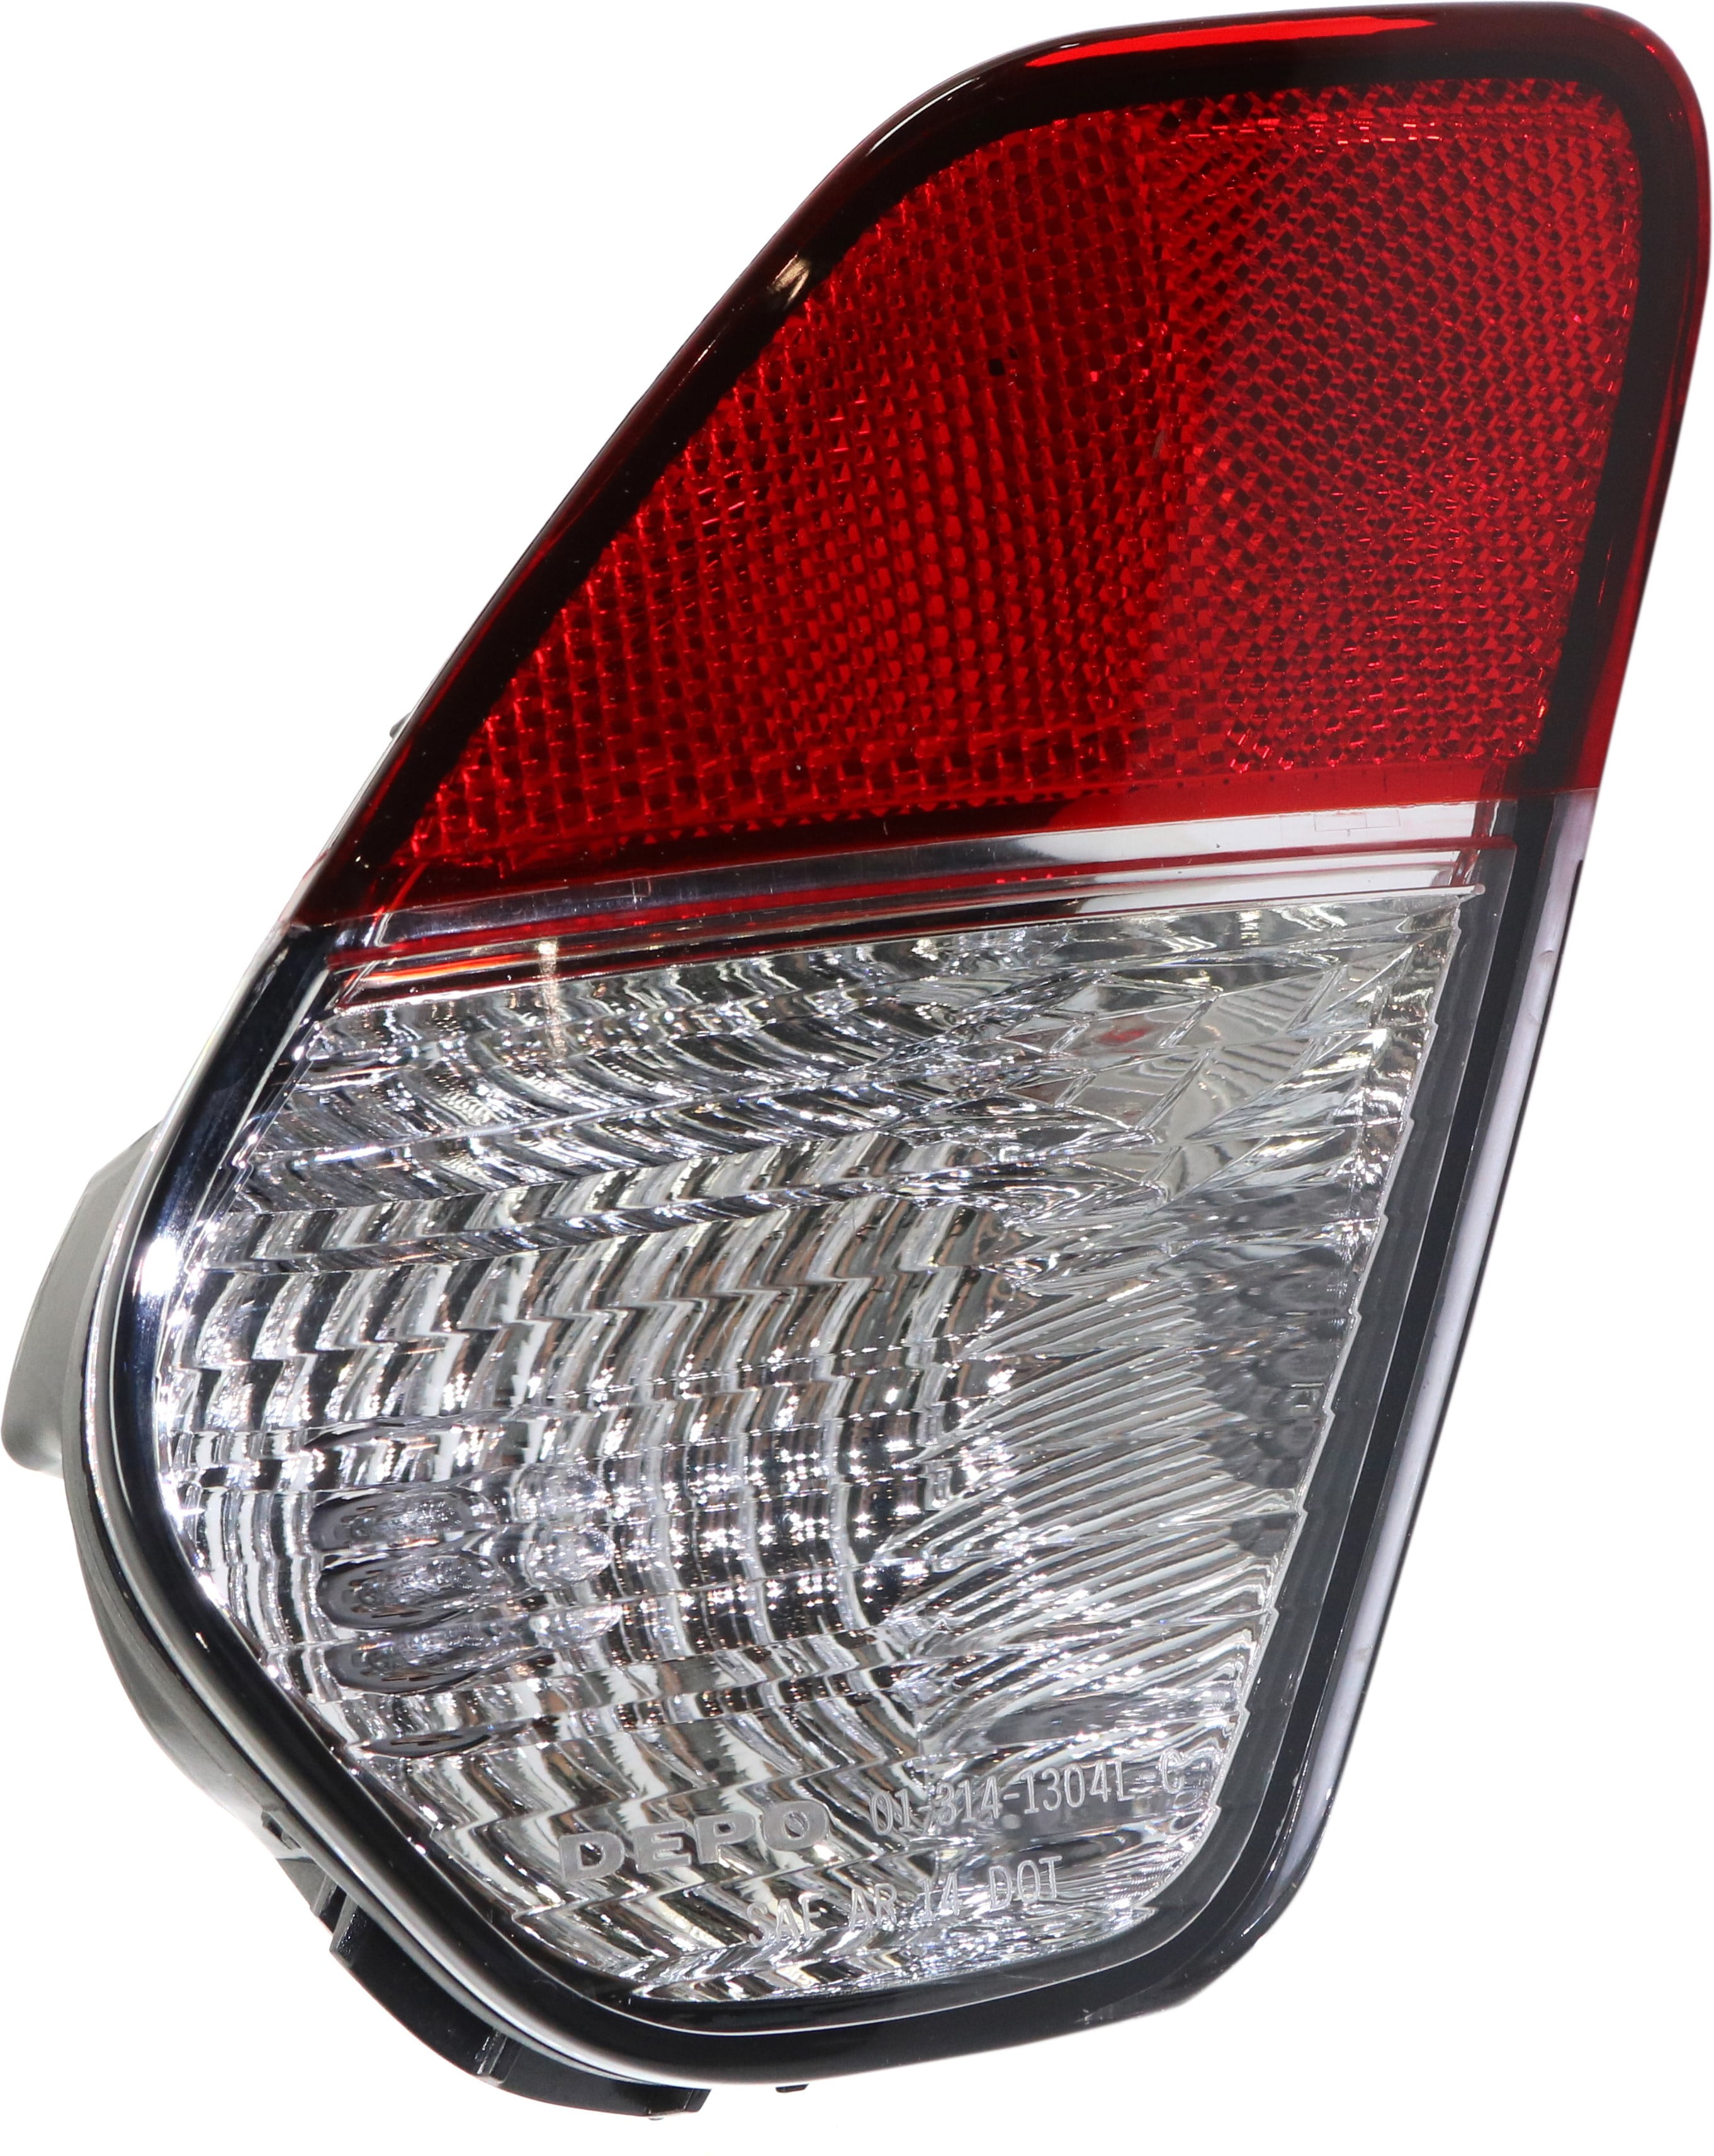 Details about   Front FOG LIGHT LAMP LEFT same as RIGHT fits Mitsubishi Outlander 2016 